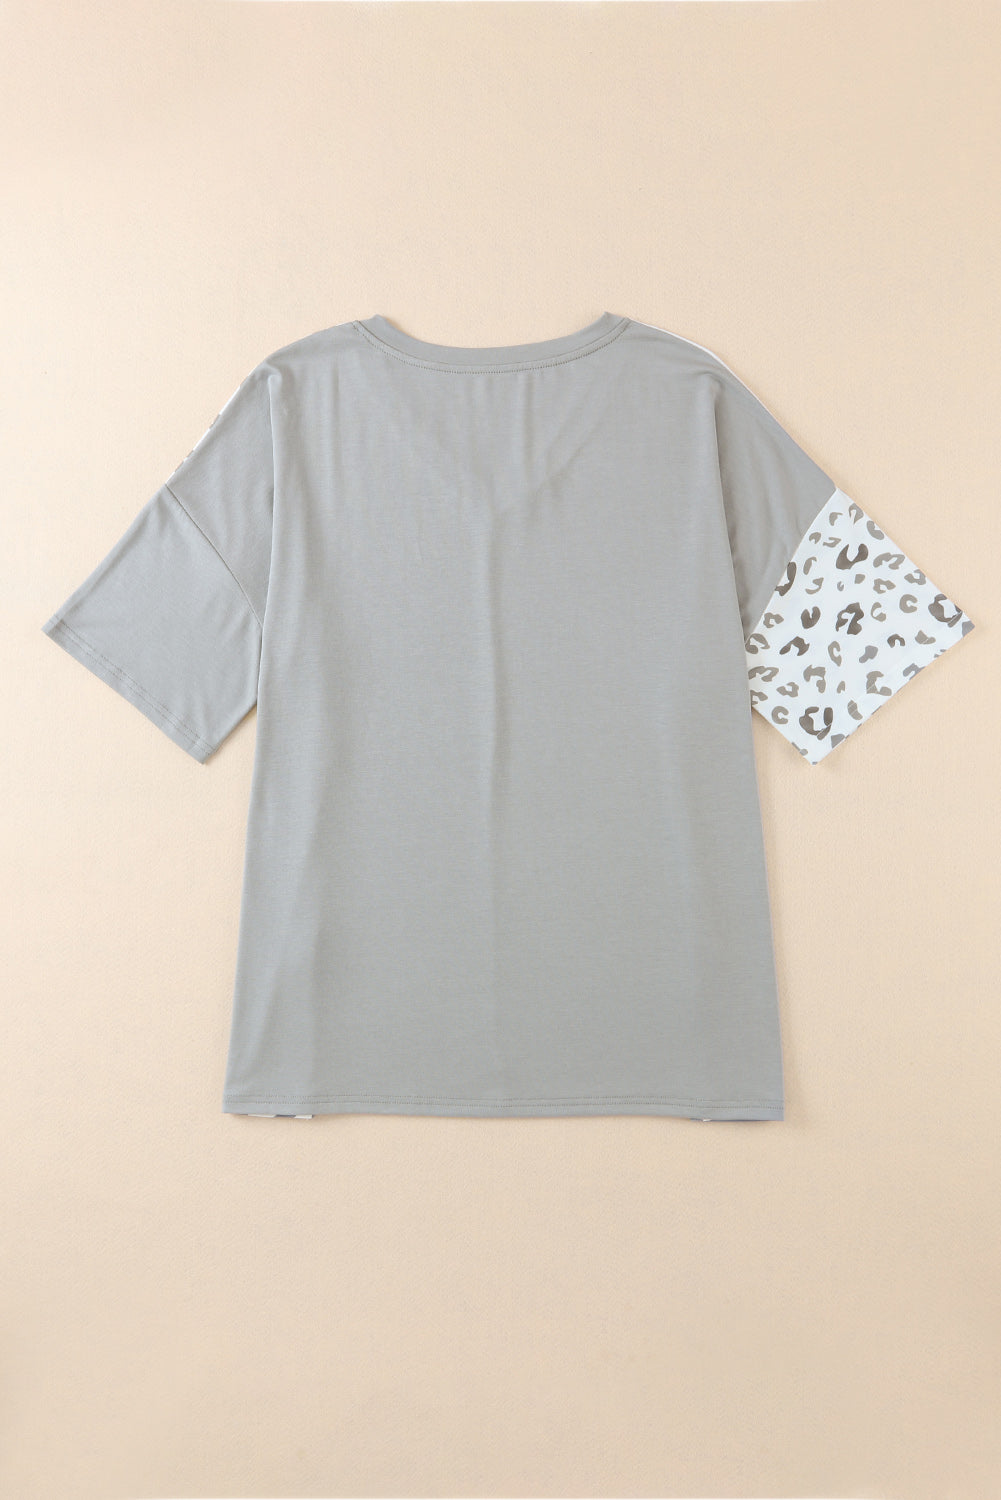 Plus Size Leopard V-Neck T-Shirt - TiffanyzKlozet